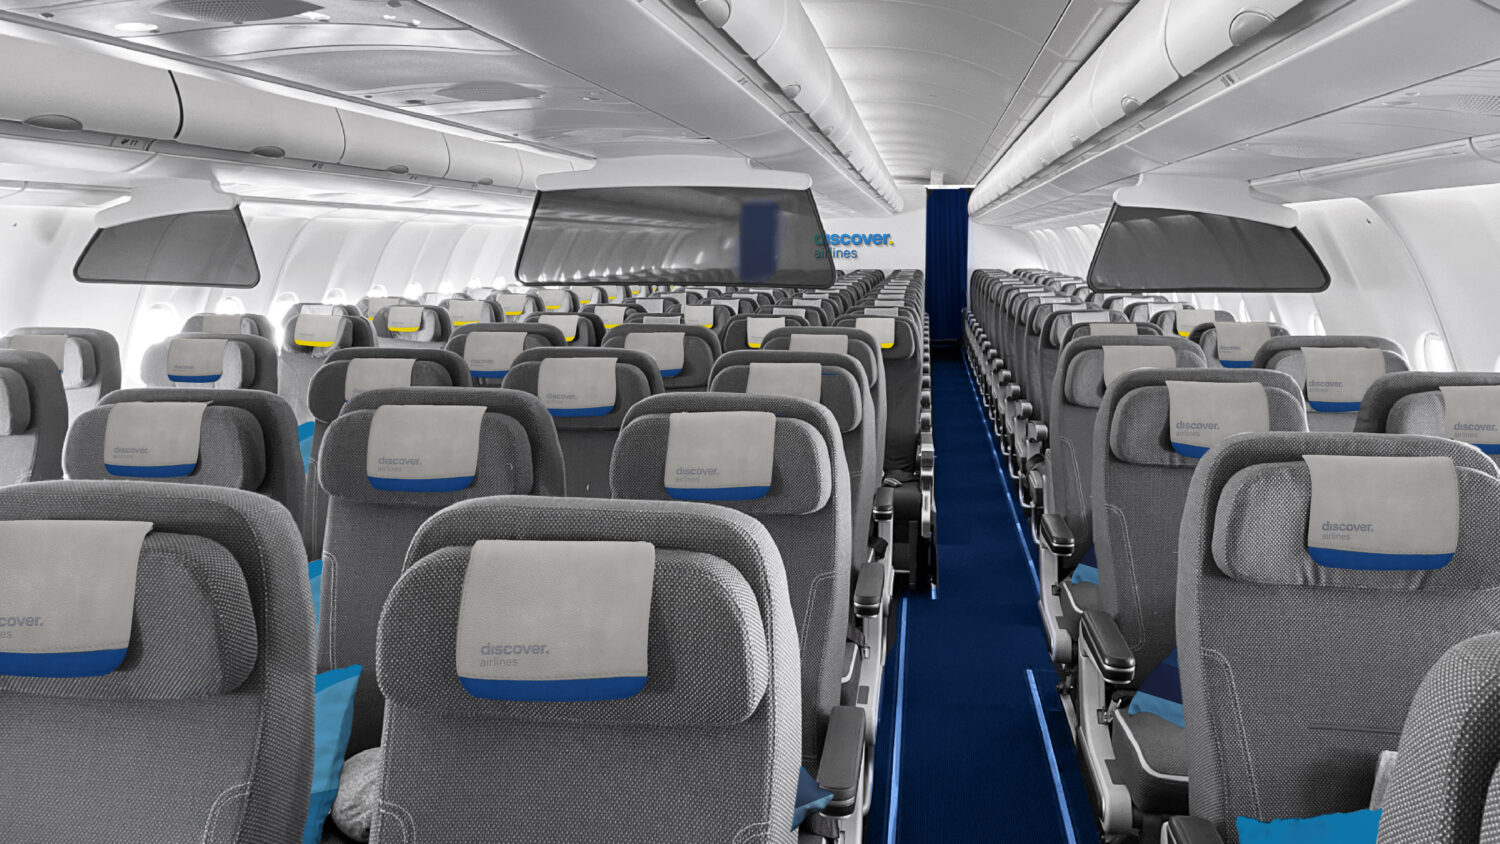 Discover Airlines Corporate Design – Interior PremiumEco, Quelle: Discover Airlines